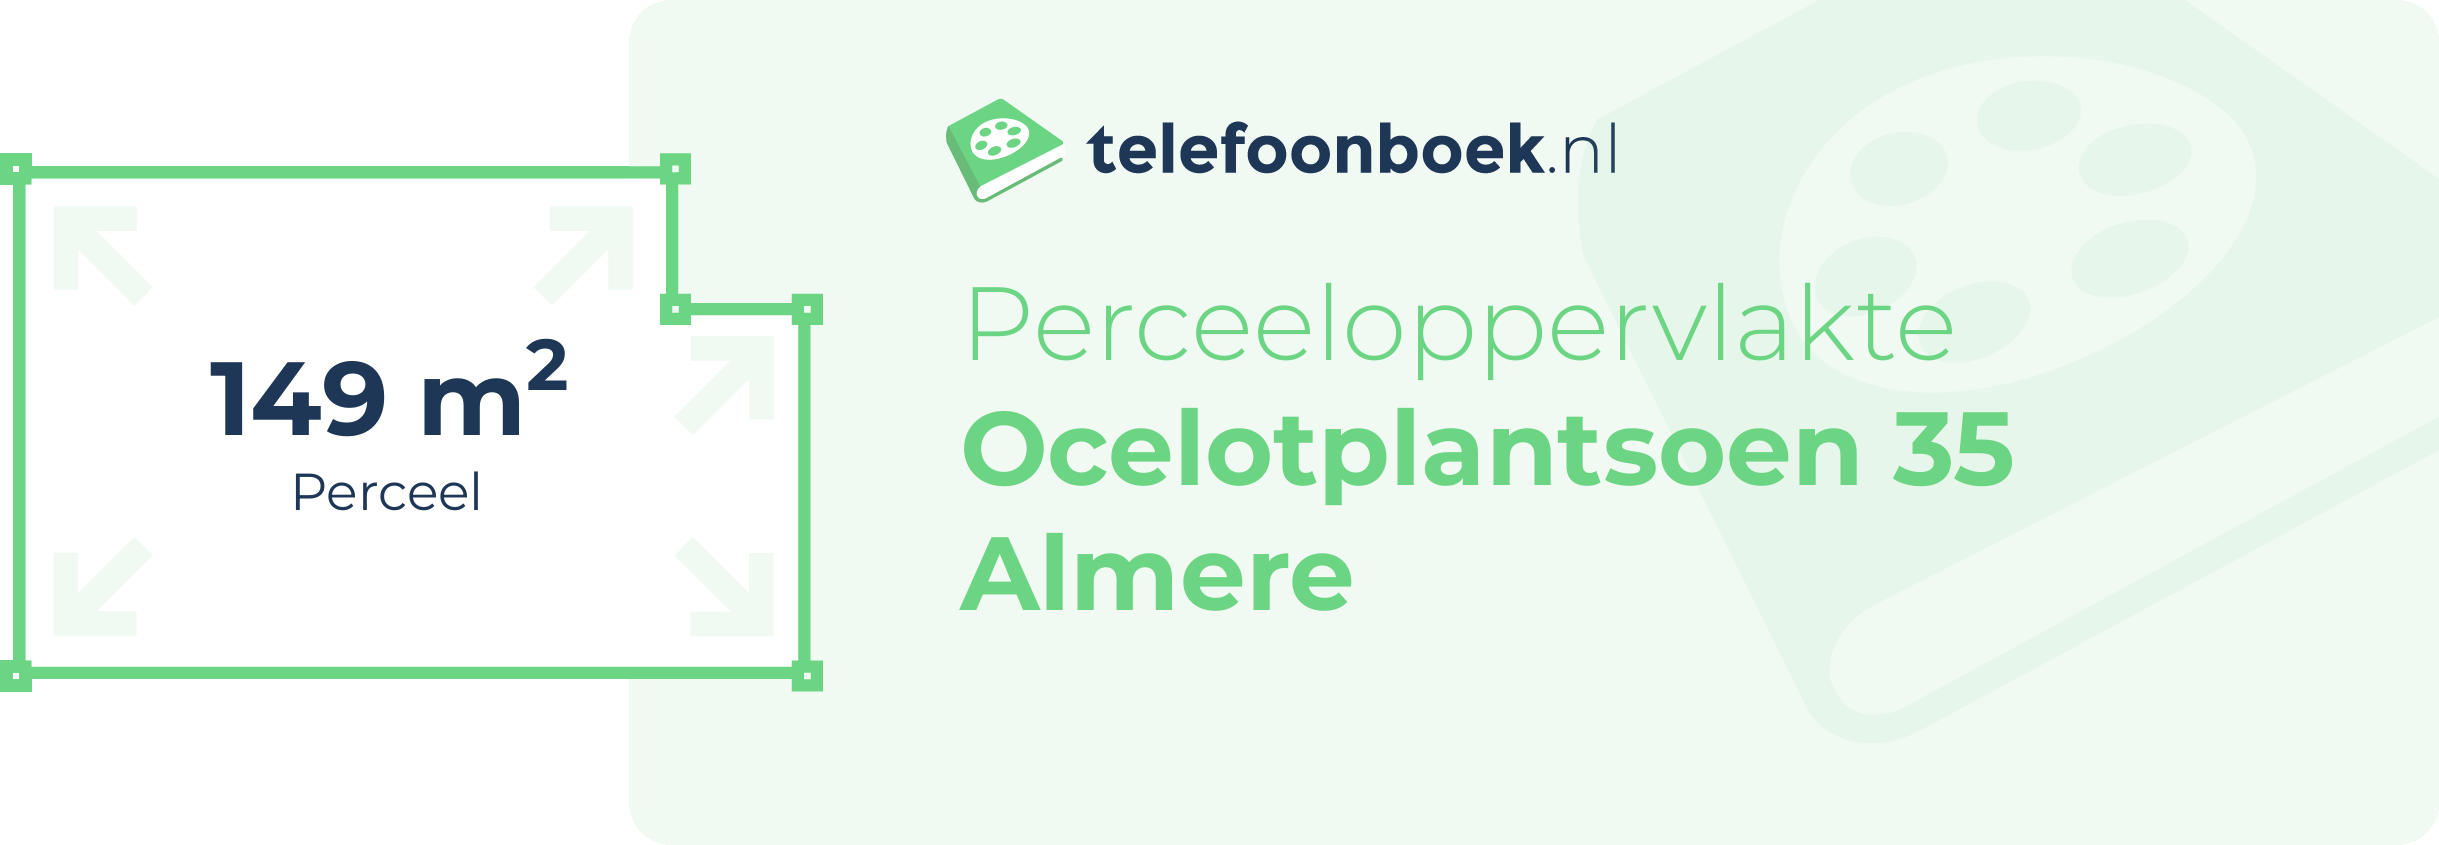 Perceeloppervlakte Ocelotplantsoen 35 Almere